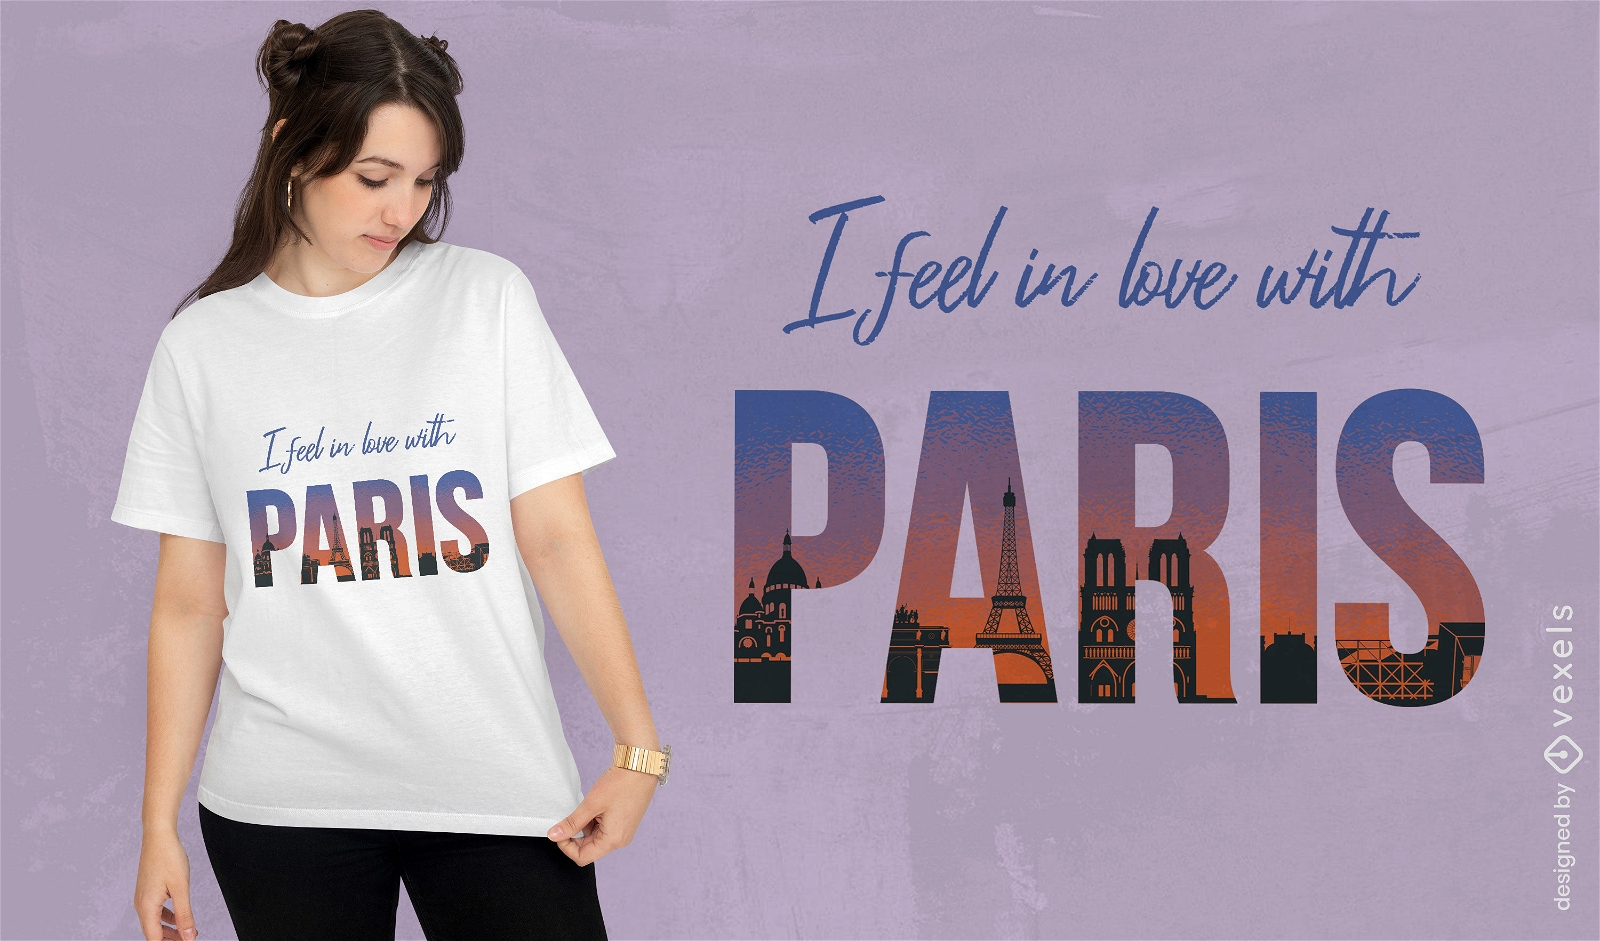 In love with Paris t-shirt design